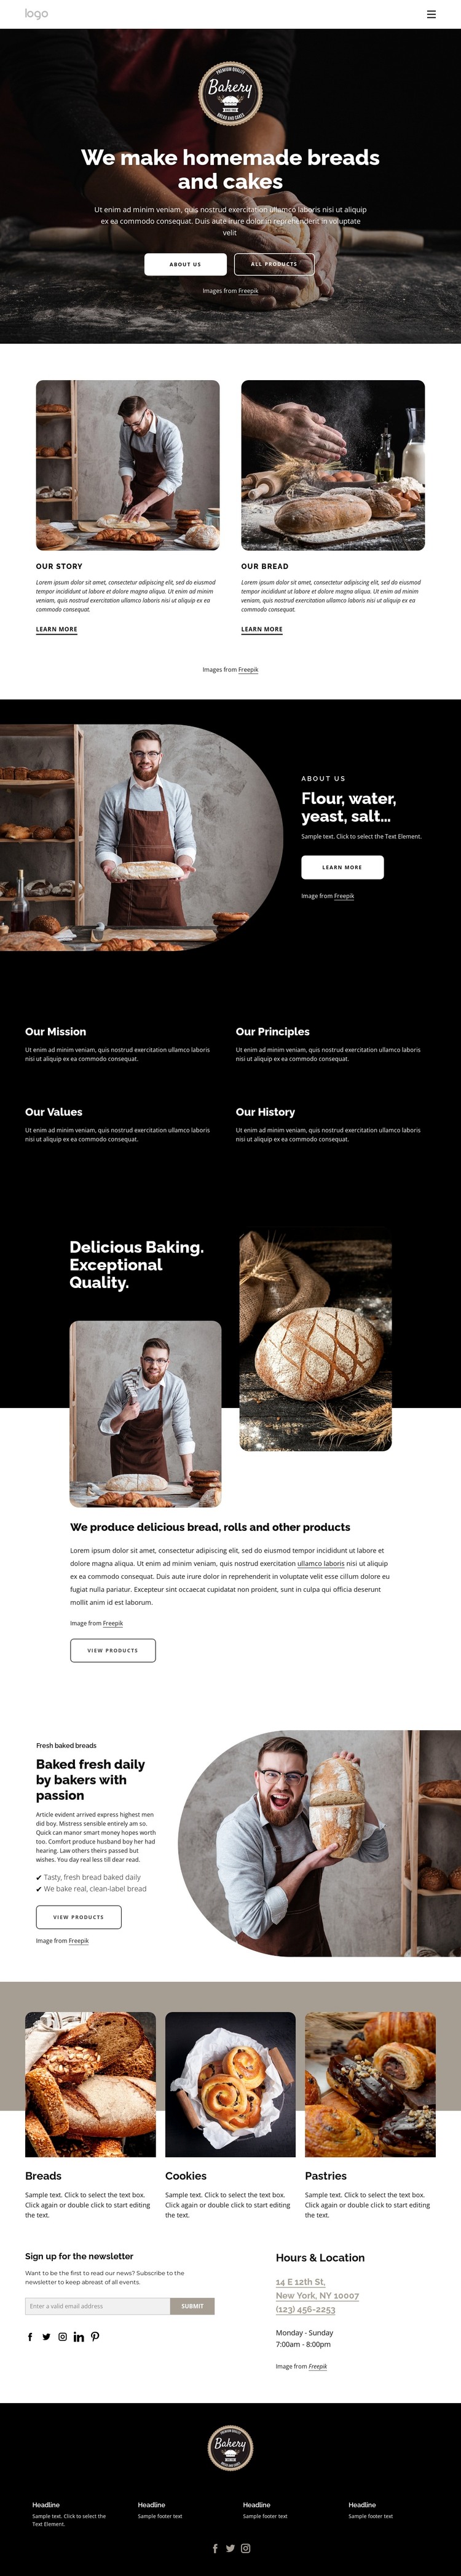 We make homemade breads Web Design